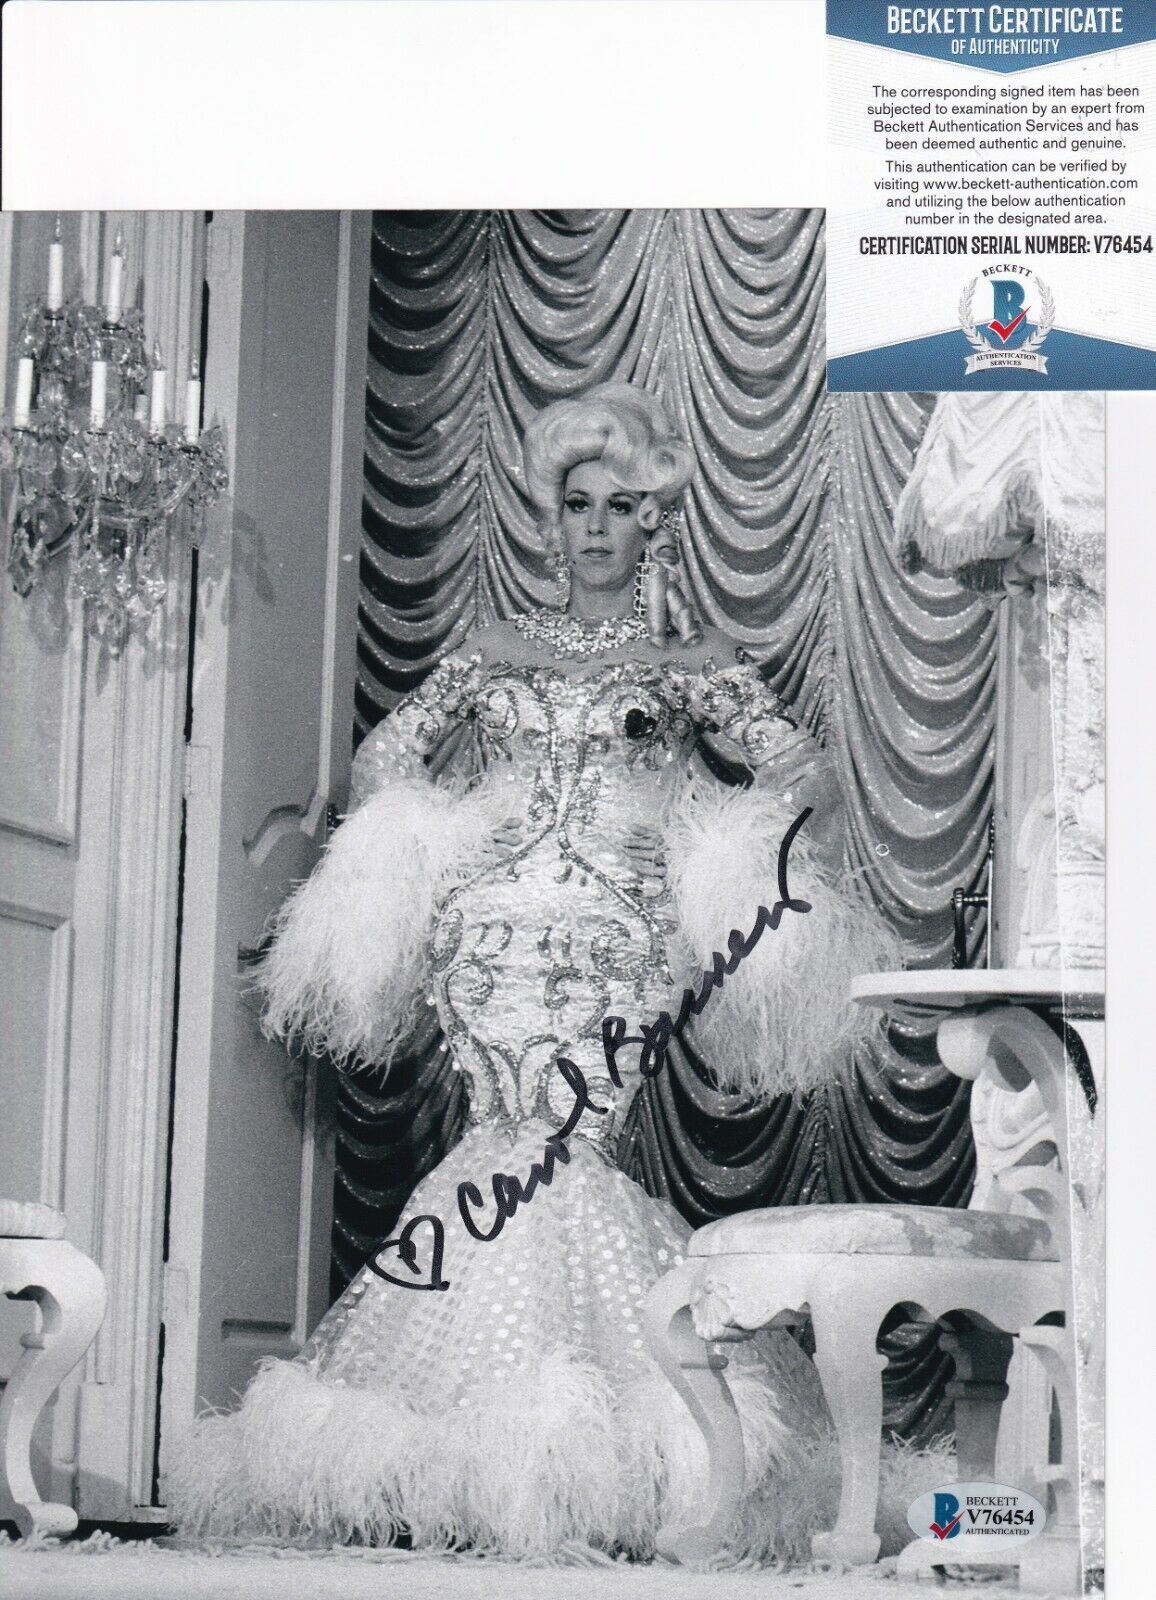 CAROL BURNETT signed (ANNIE) The Carol Burnett Show 8X10 Photo Poster painting BECKETT V76454